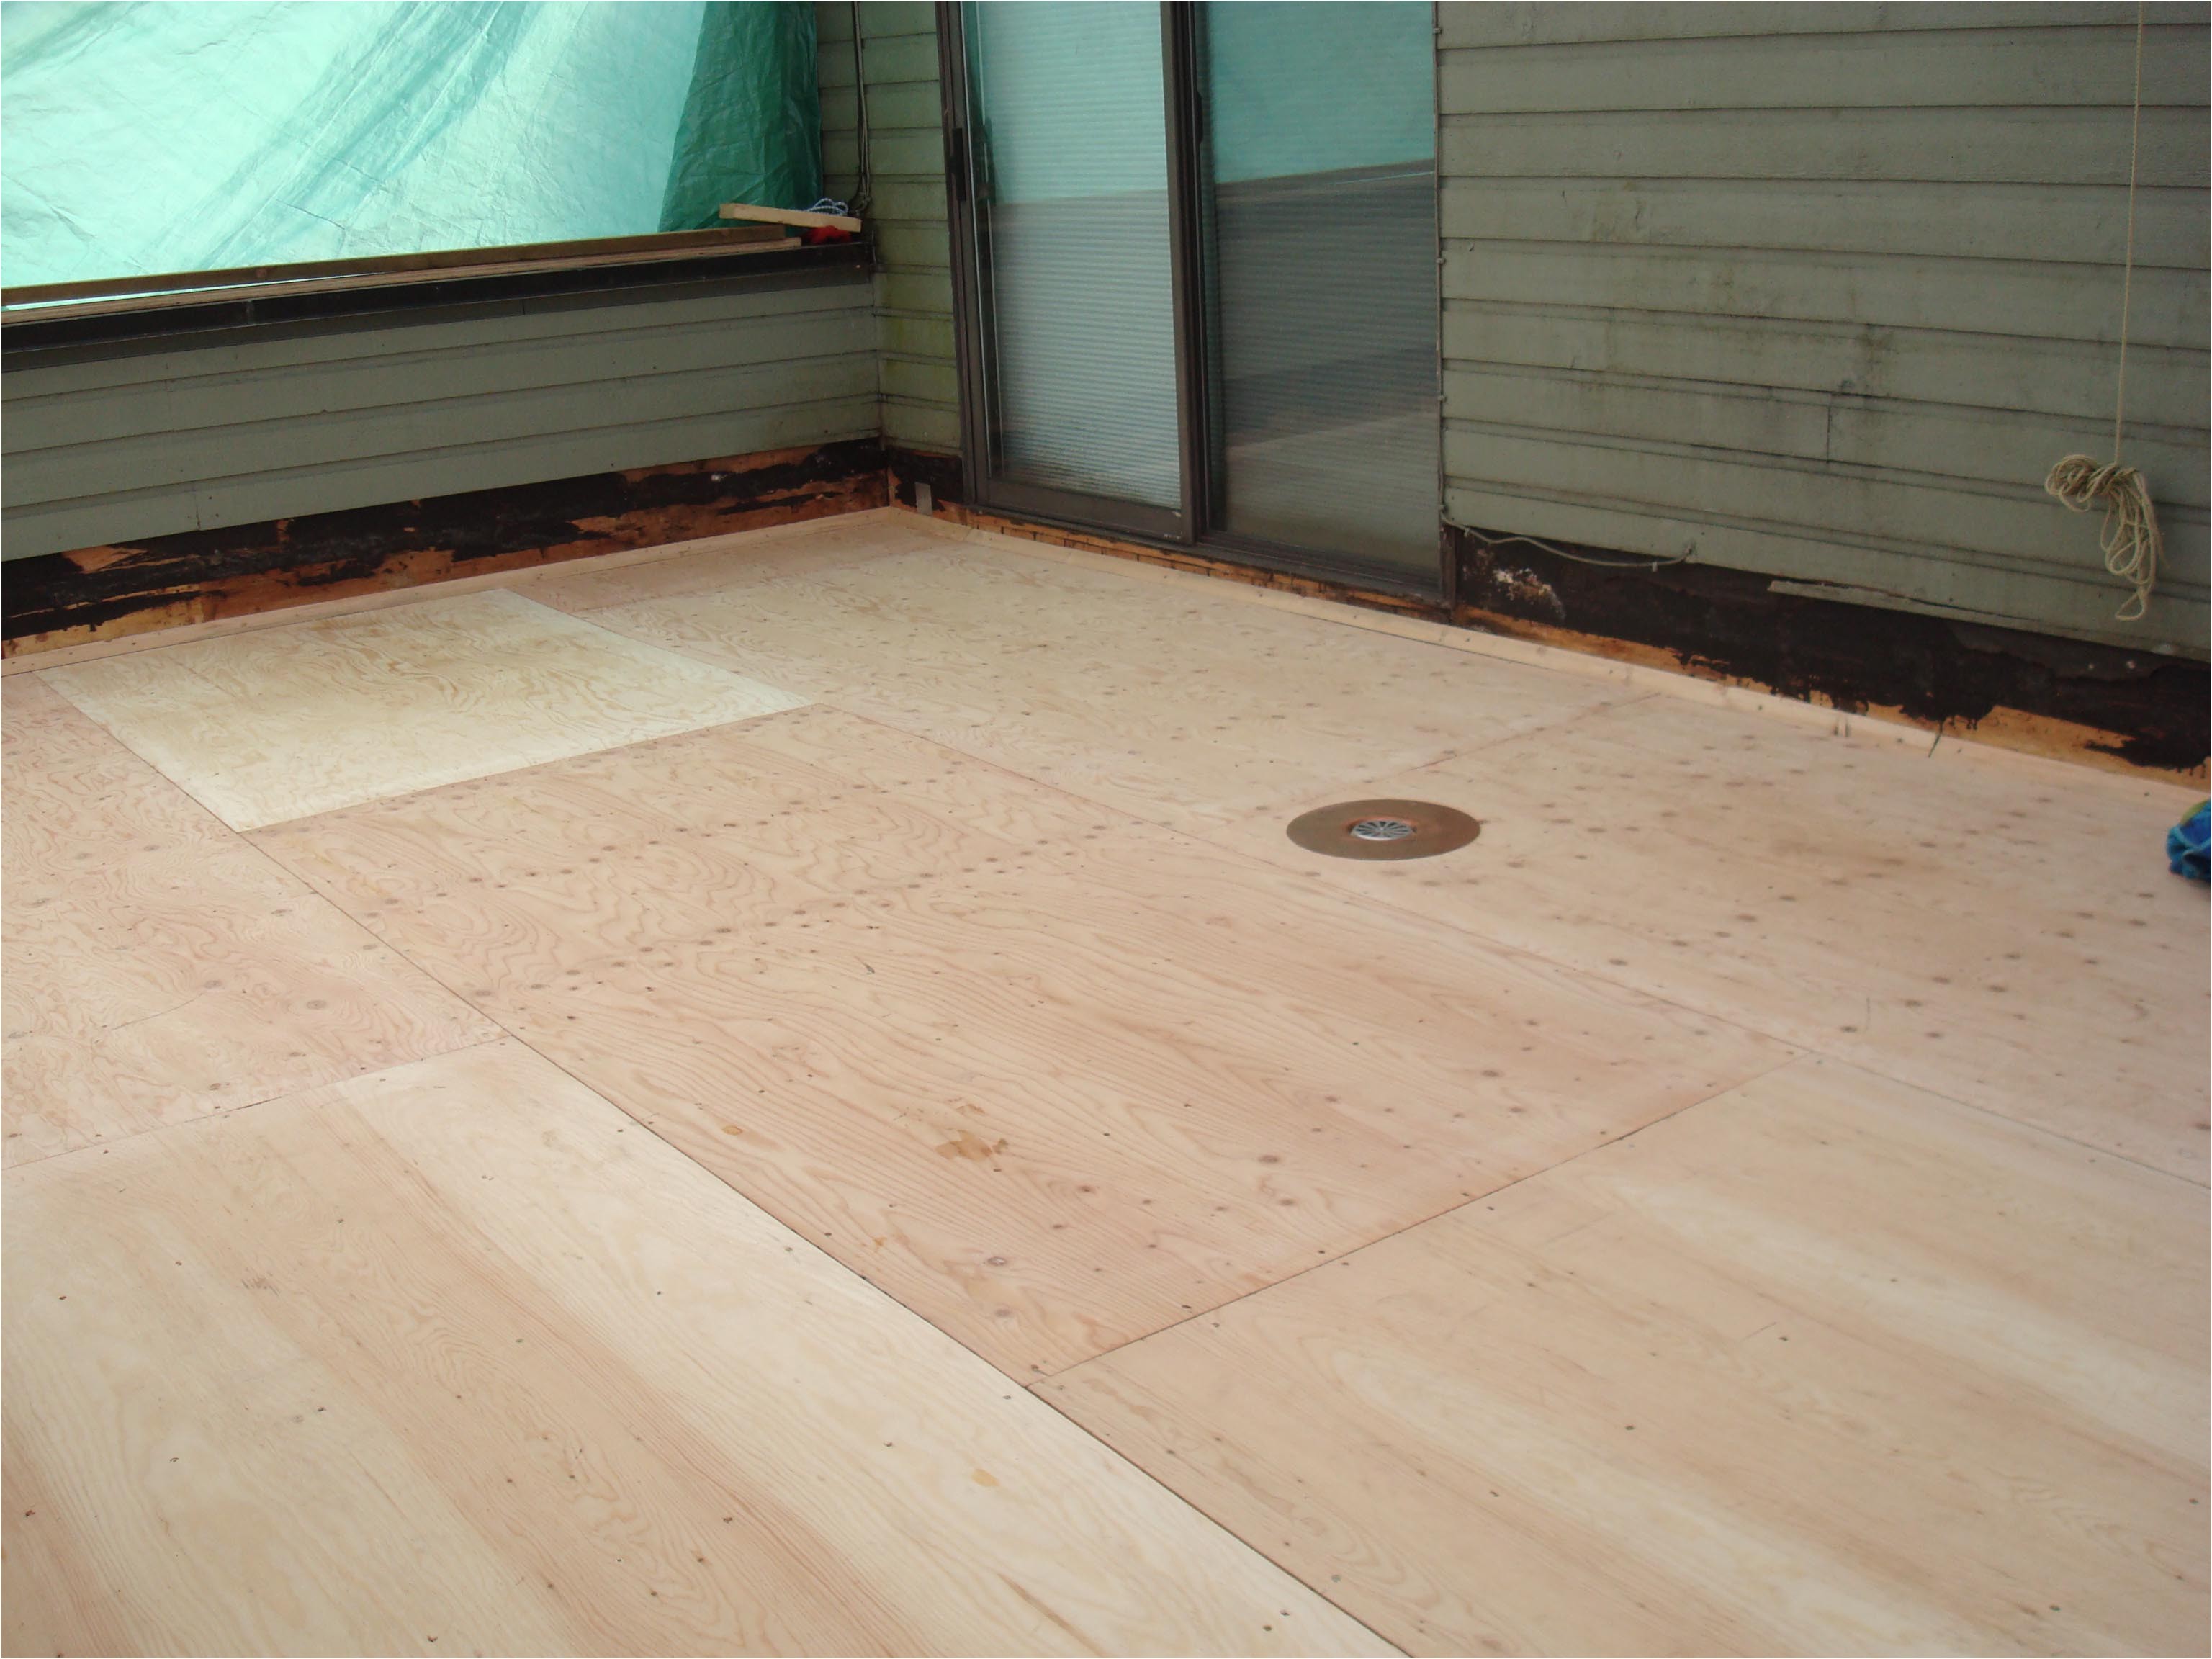 waterproof deck coating for plywood